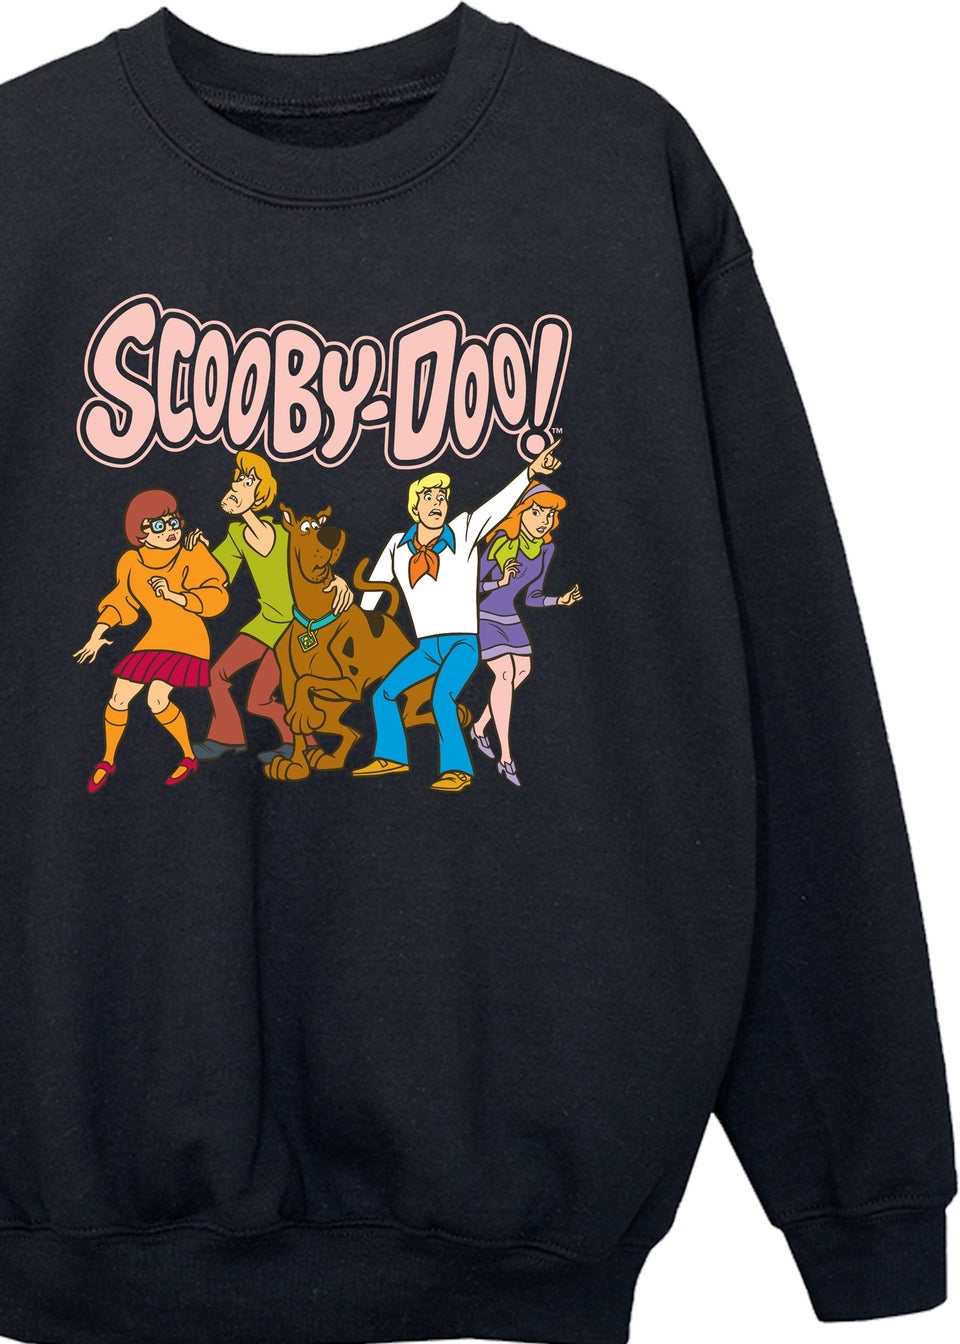 Scooby Doo Kids Black Core Group Printed Sweatshirt (3-13 yrs)